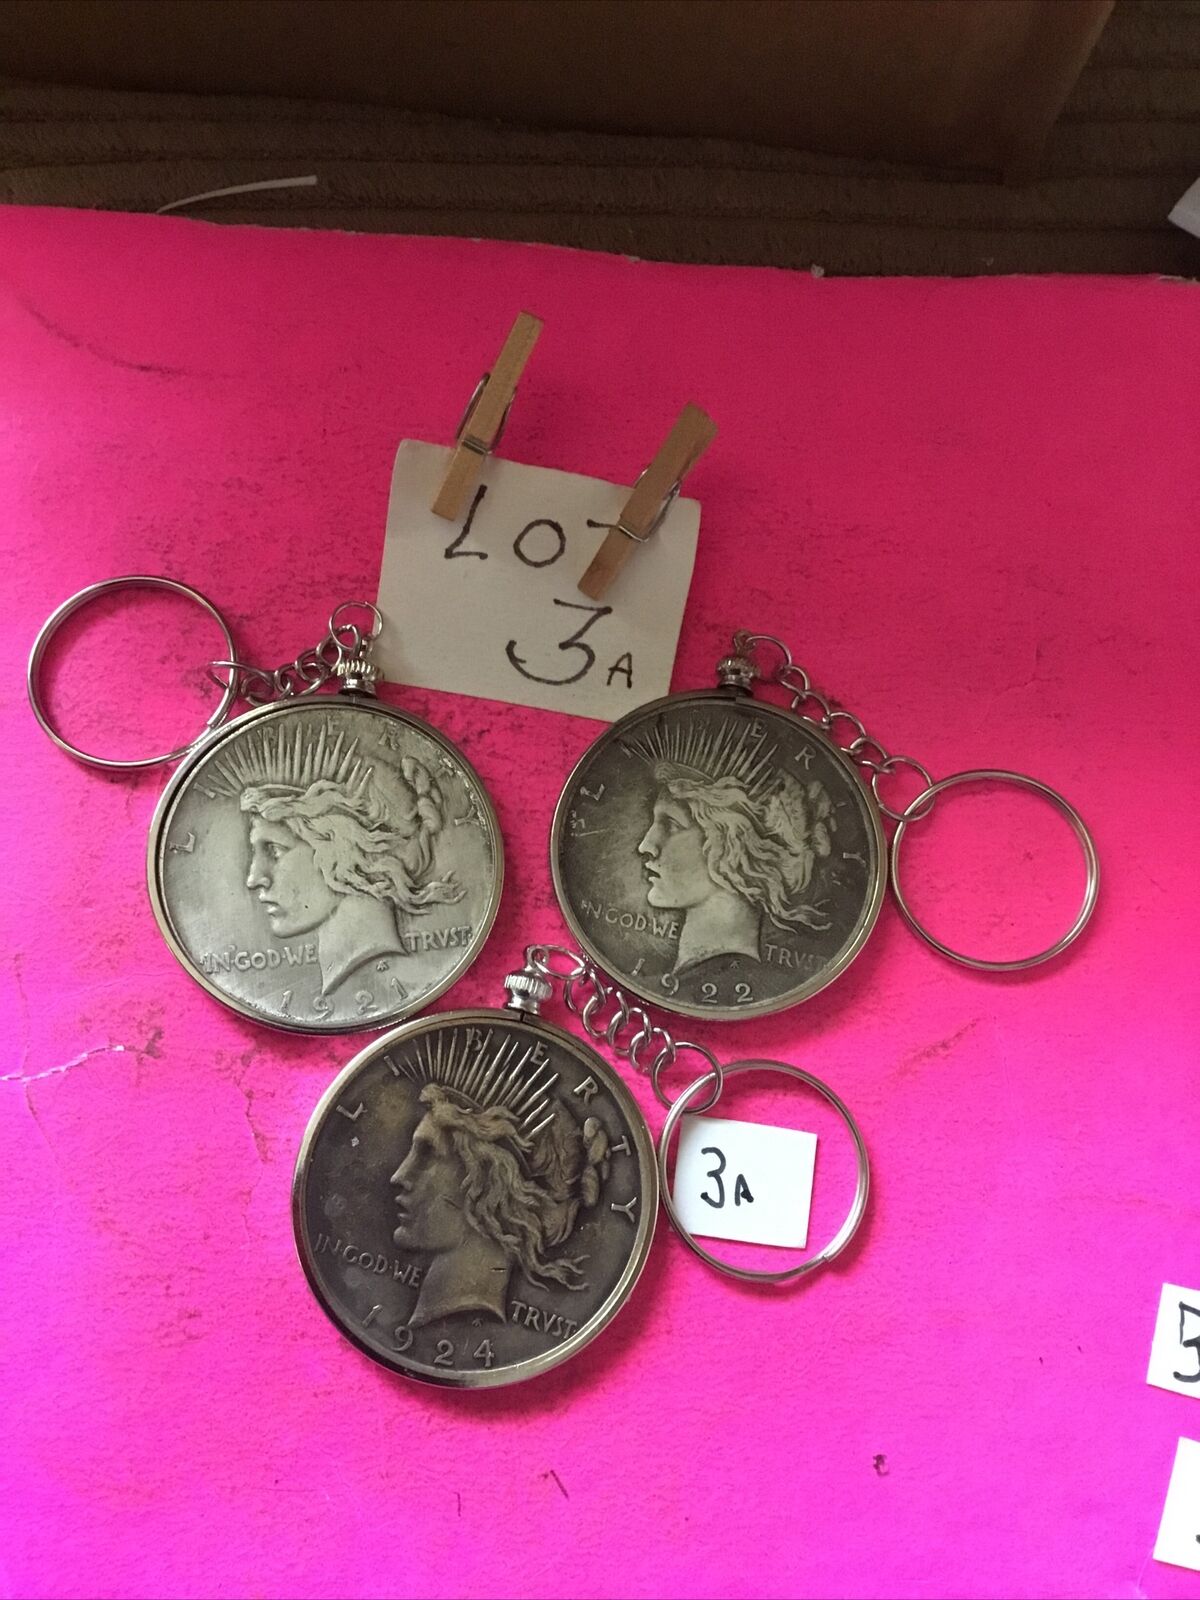 Set 3 Lot Coin Keychains 1921-1822-1824 Copies Junk Drawer Estate Find Read